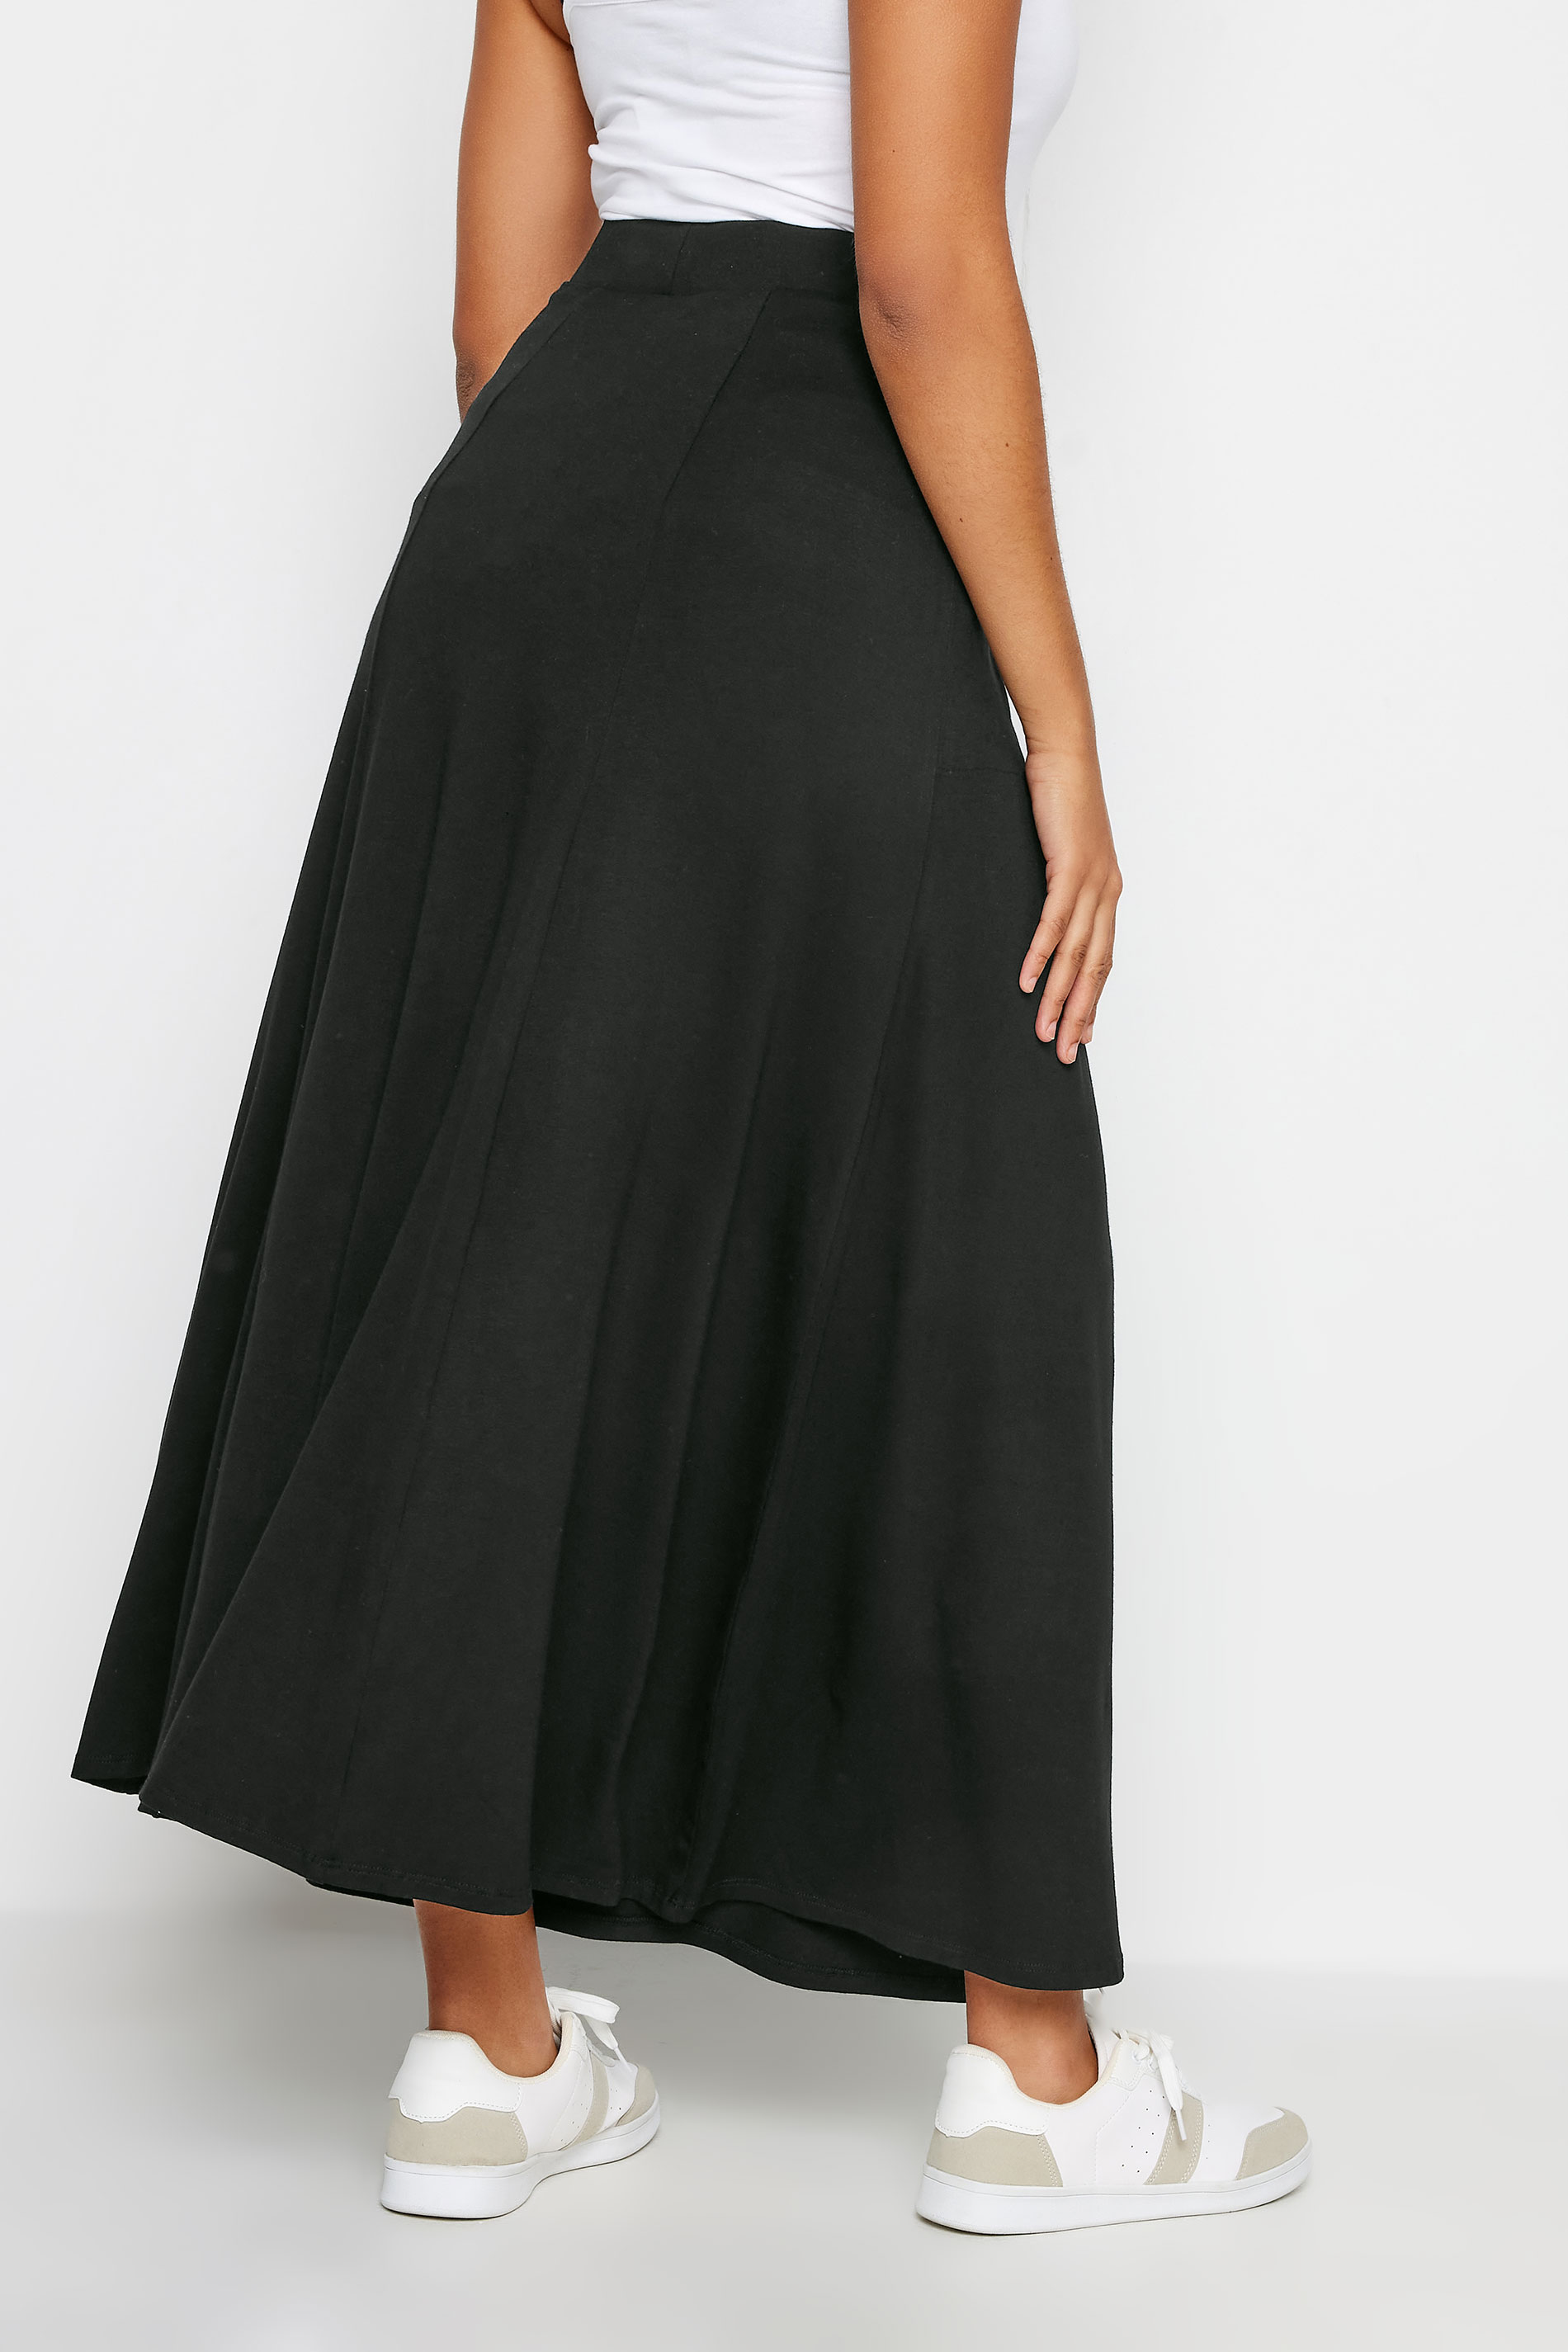 M&Co Black Pocket Maxi Skirt | M&Co 3